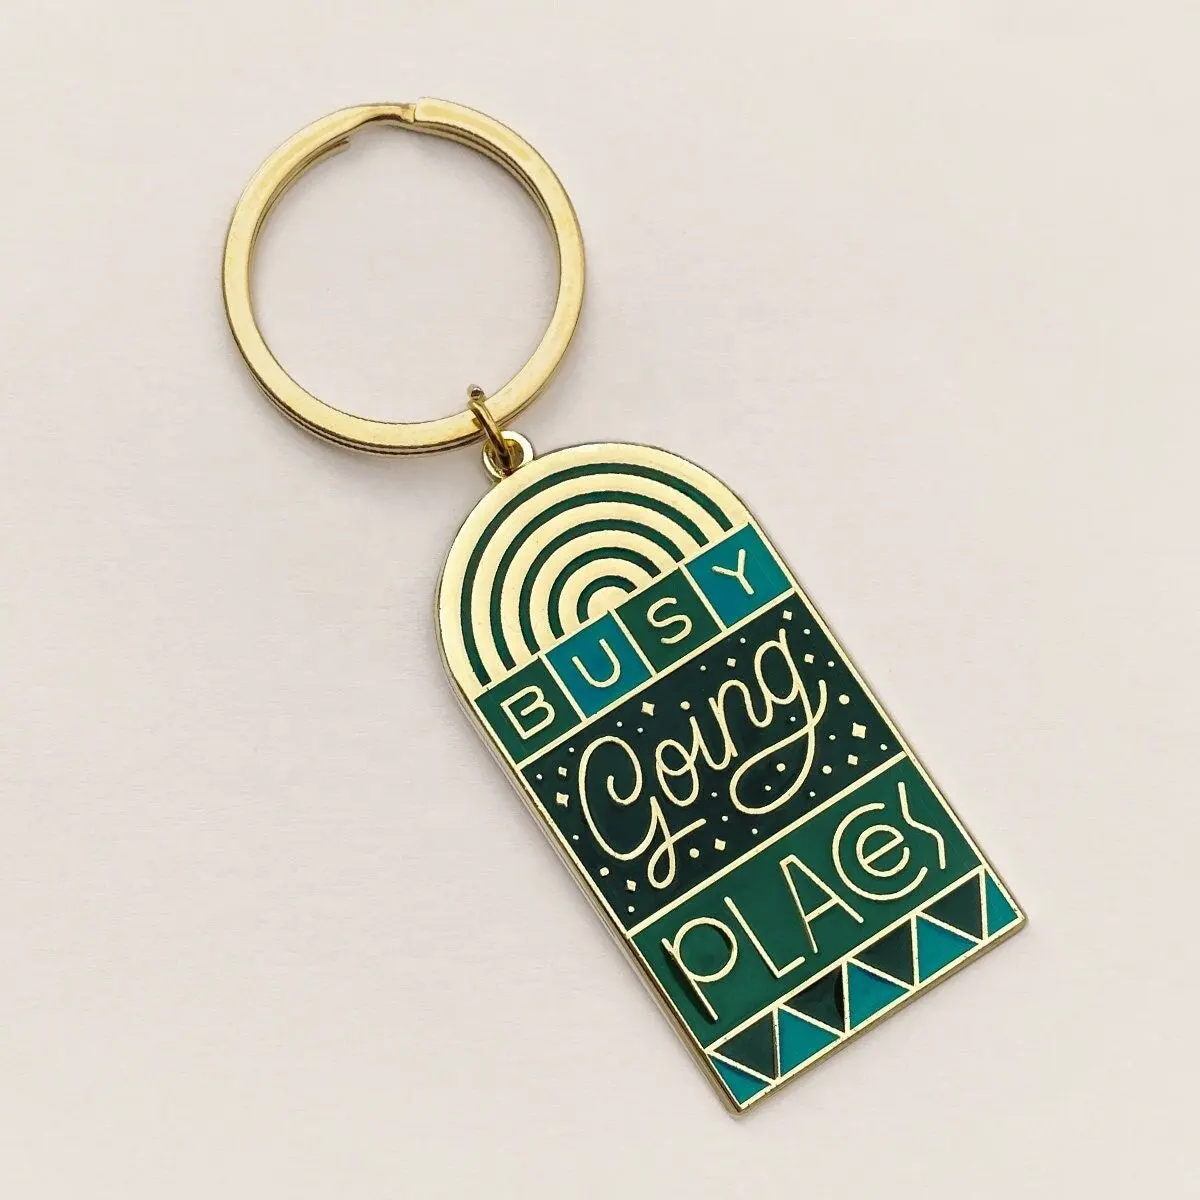 Factory Low MOQ Gold Letter Souvenir Key Ring Custom Mascot Brand LOGO 3D Metal Promotional Gift Anime Enamel Customize Keychain